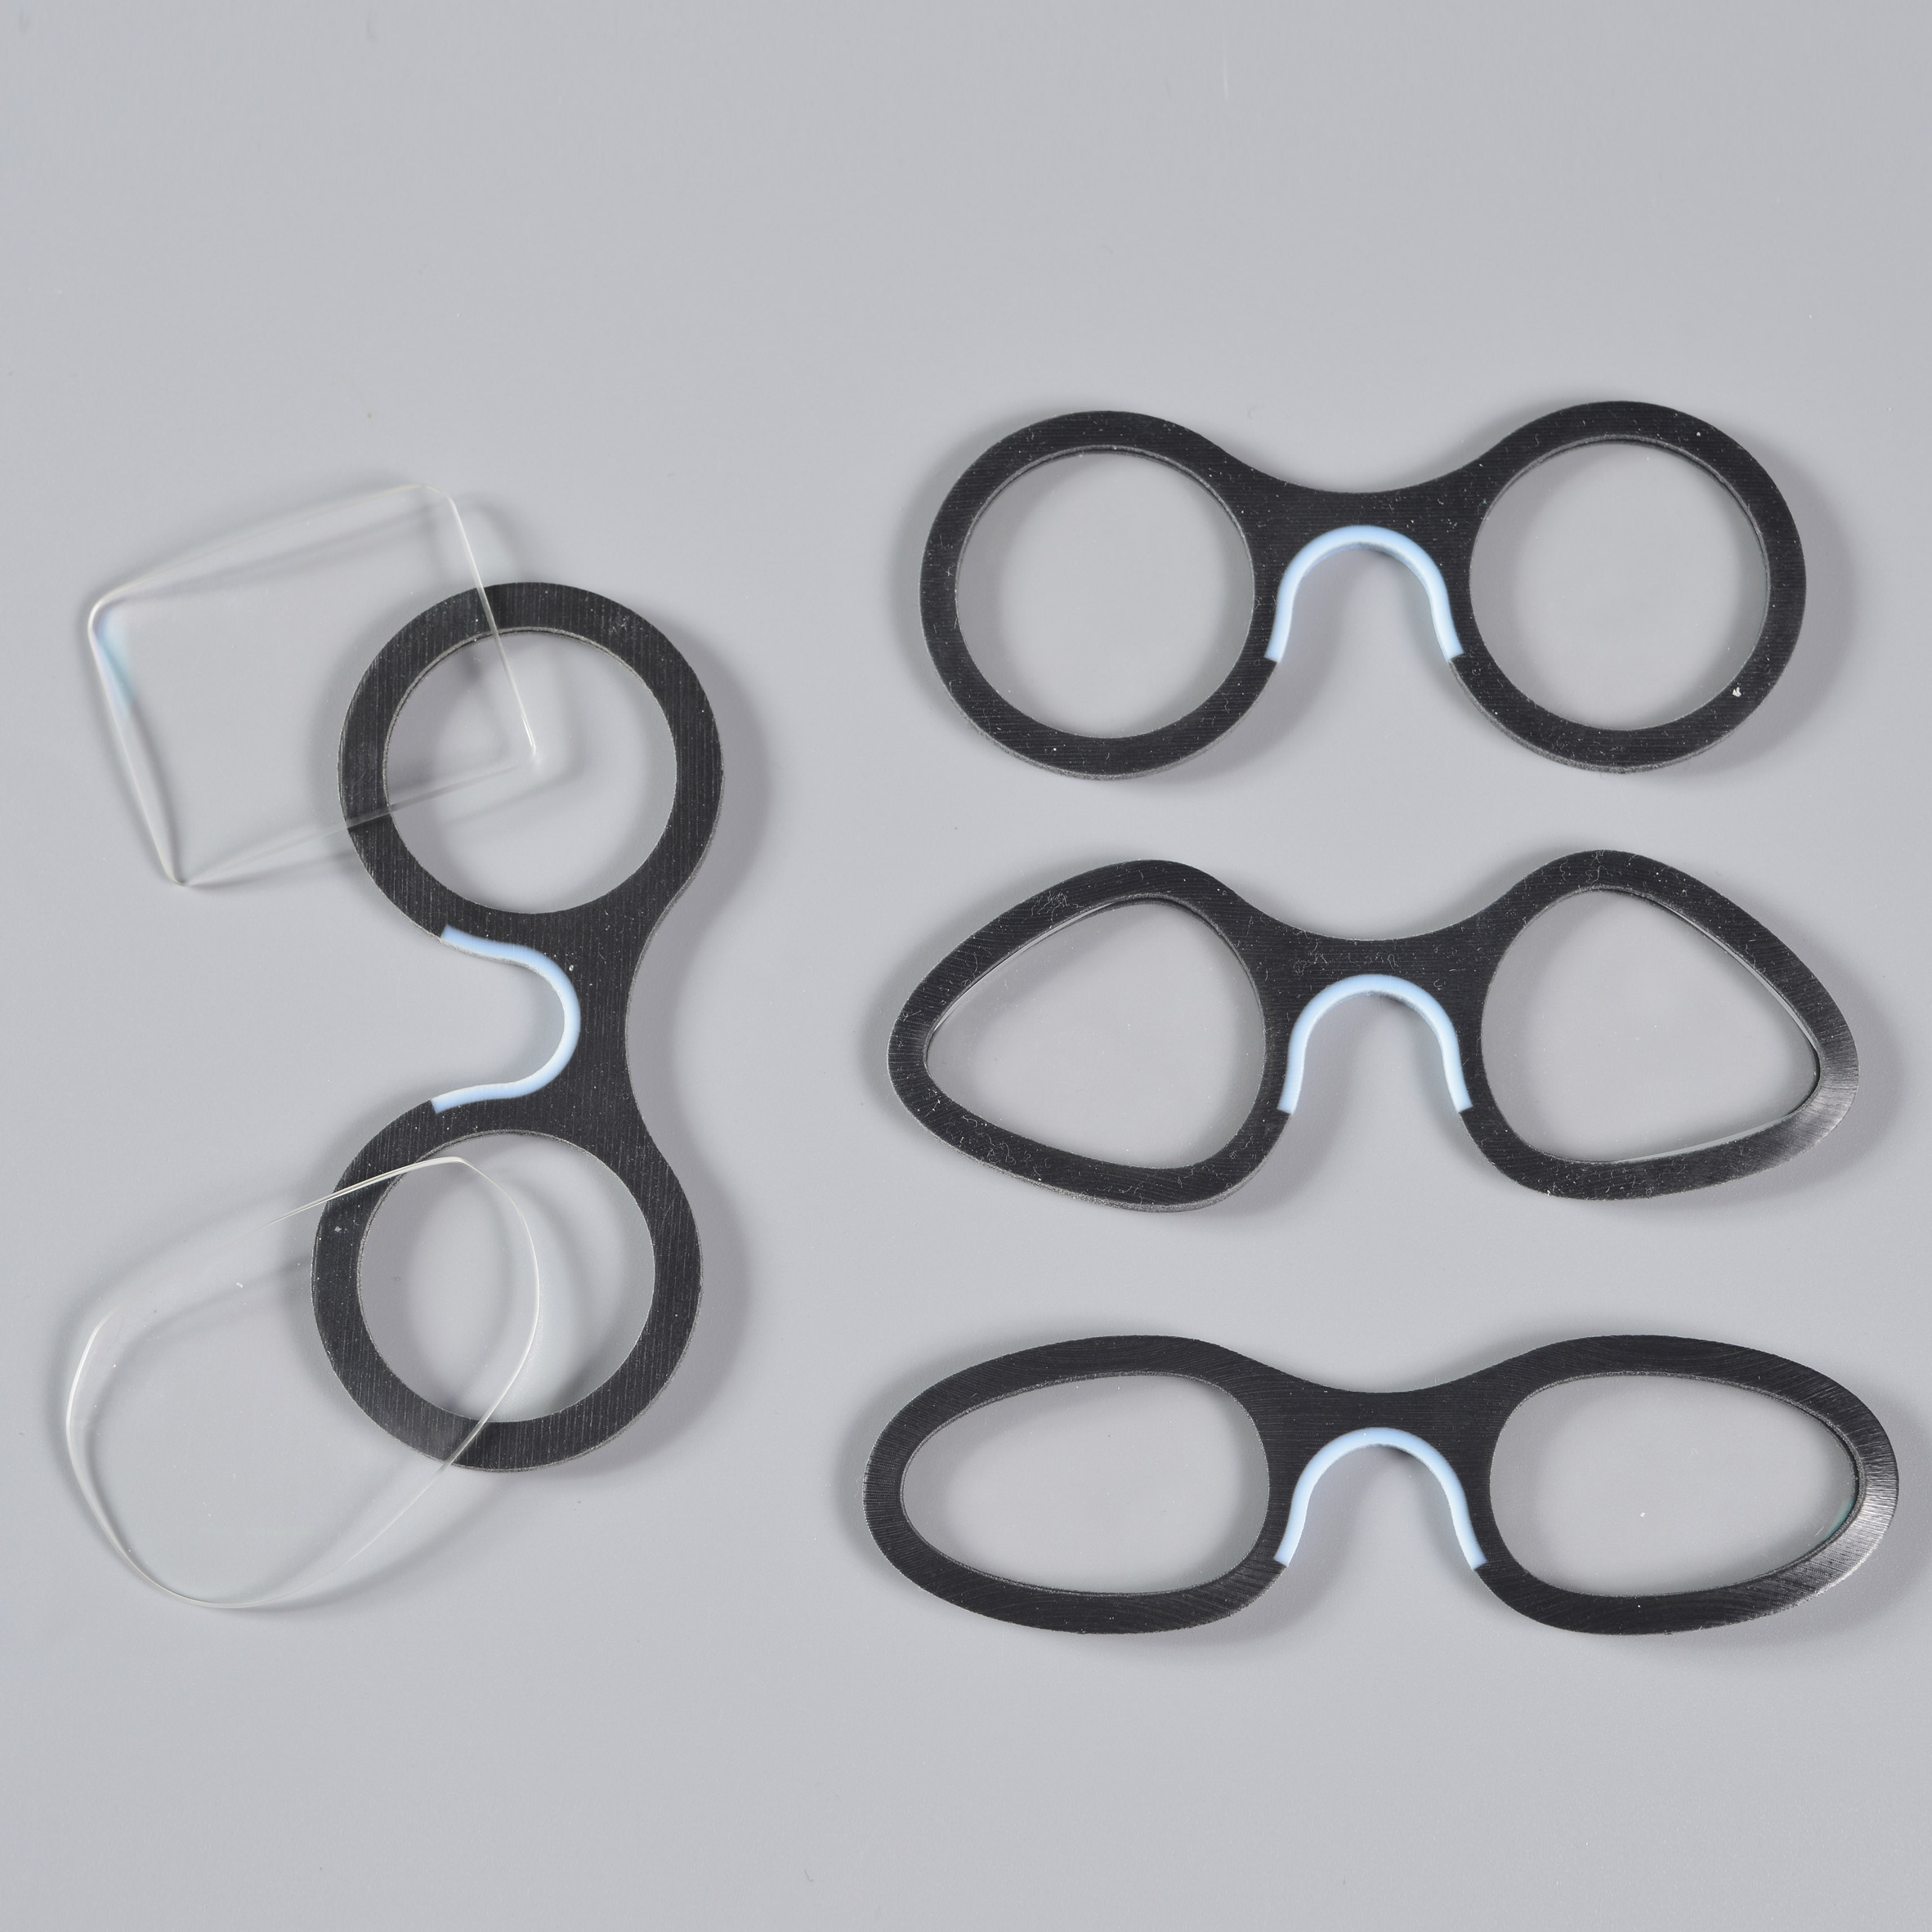 open-glasses-design-overview-eyewear-exhibition-design-museum-holon_dezeen_sq